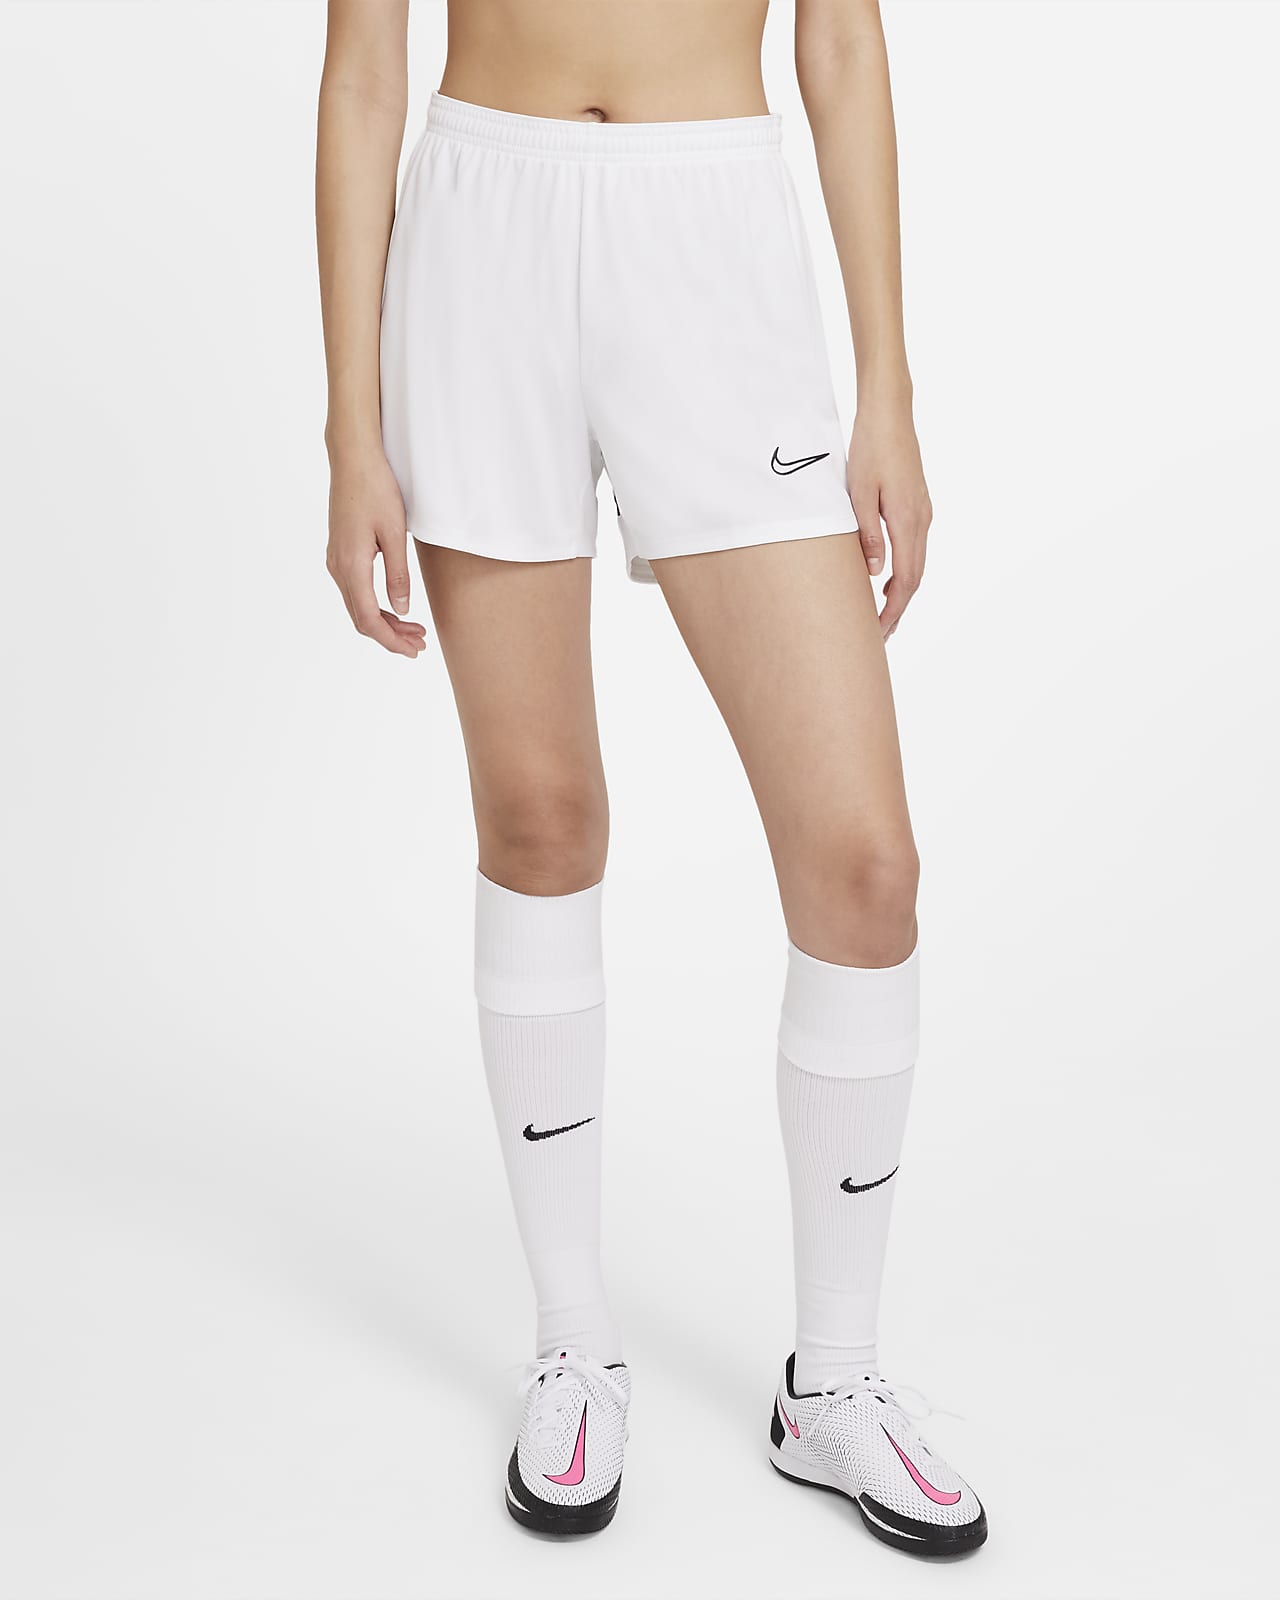 nike dri fit soccer shorts womens